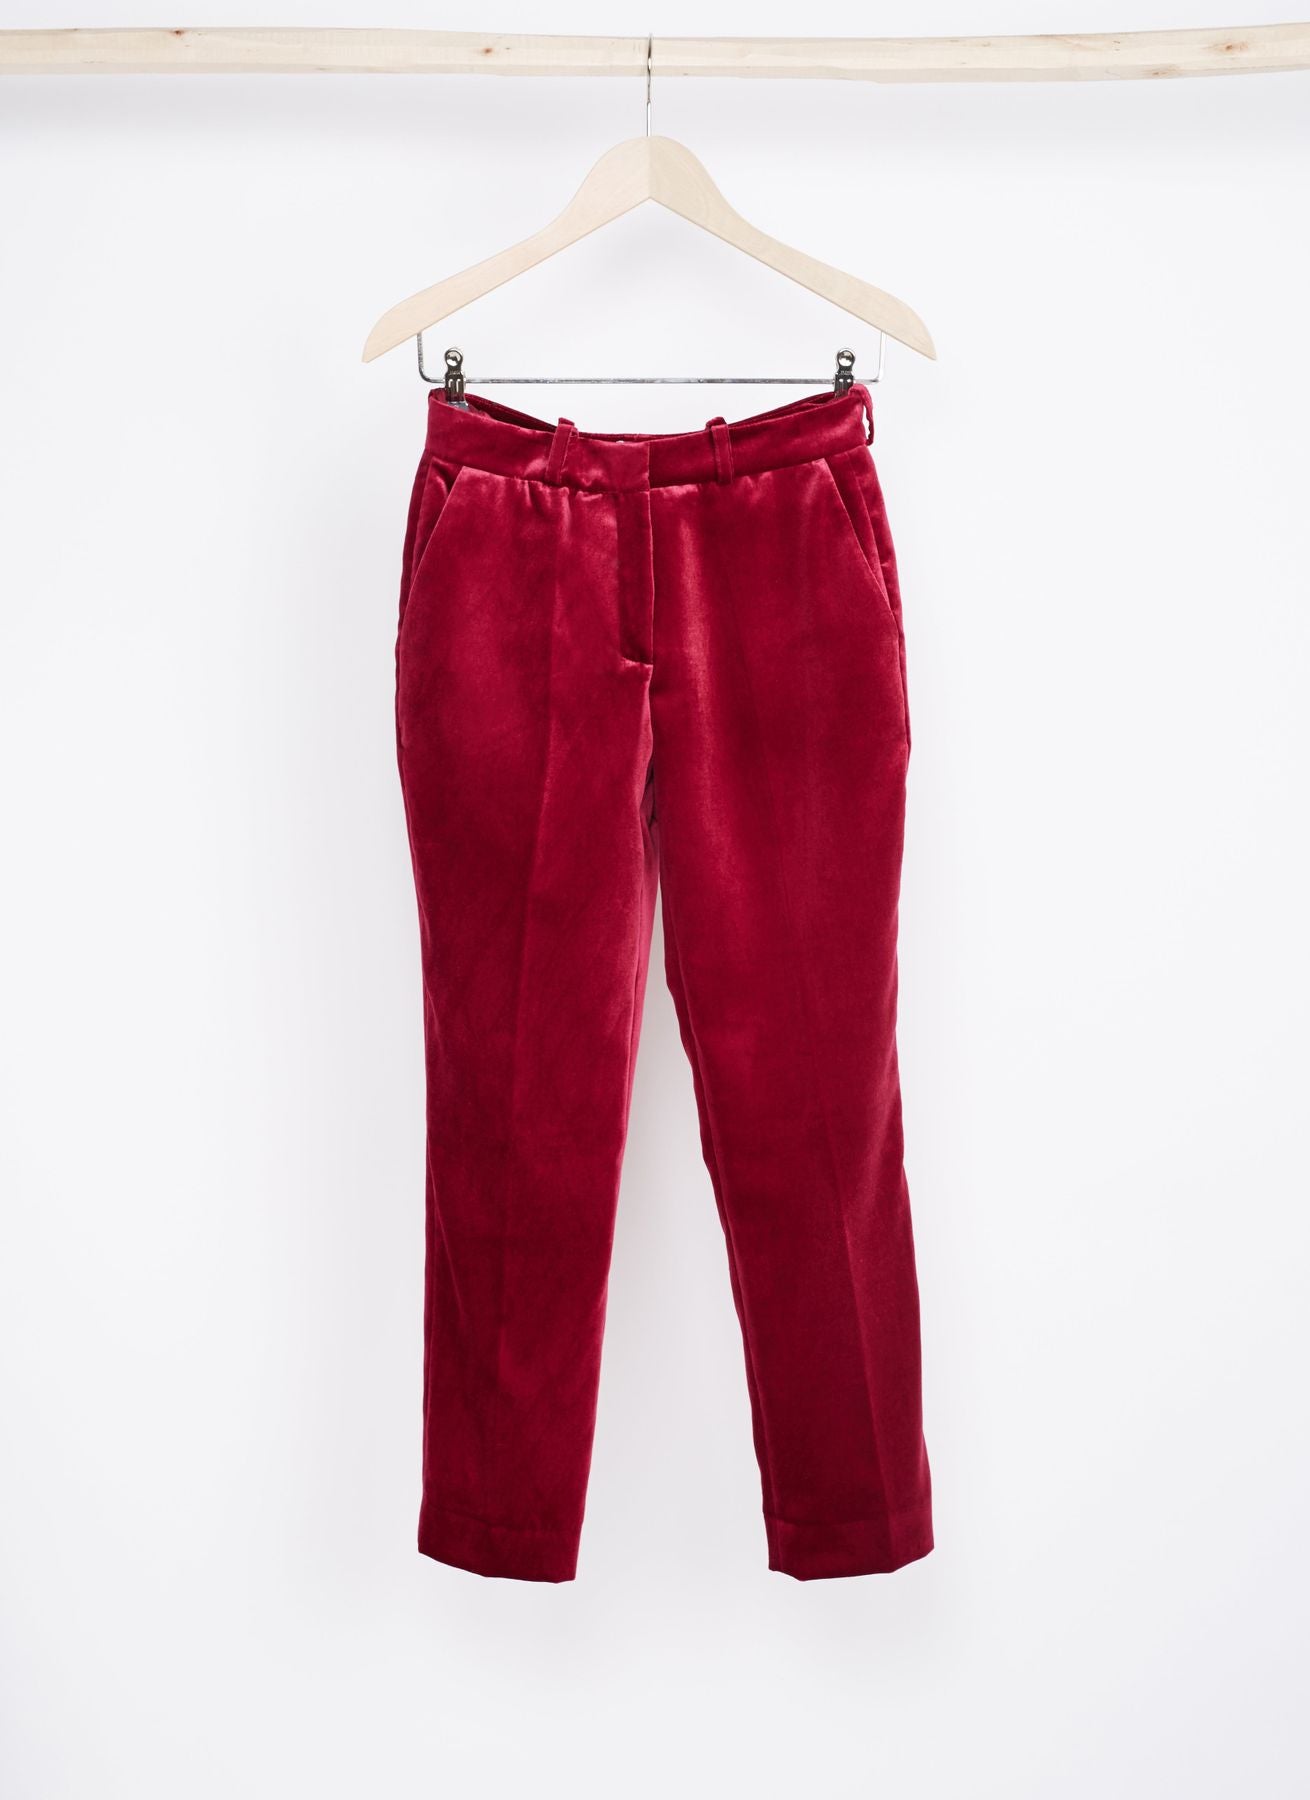 pantaloni rosso-rubino-audrey